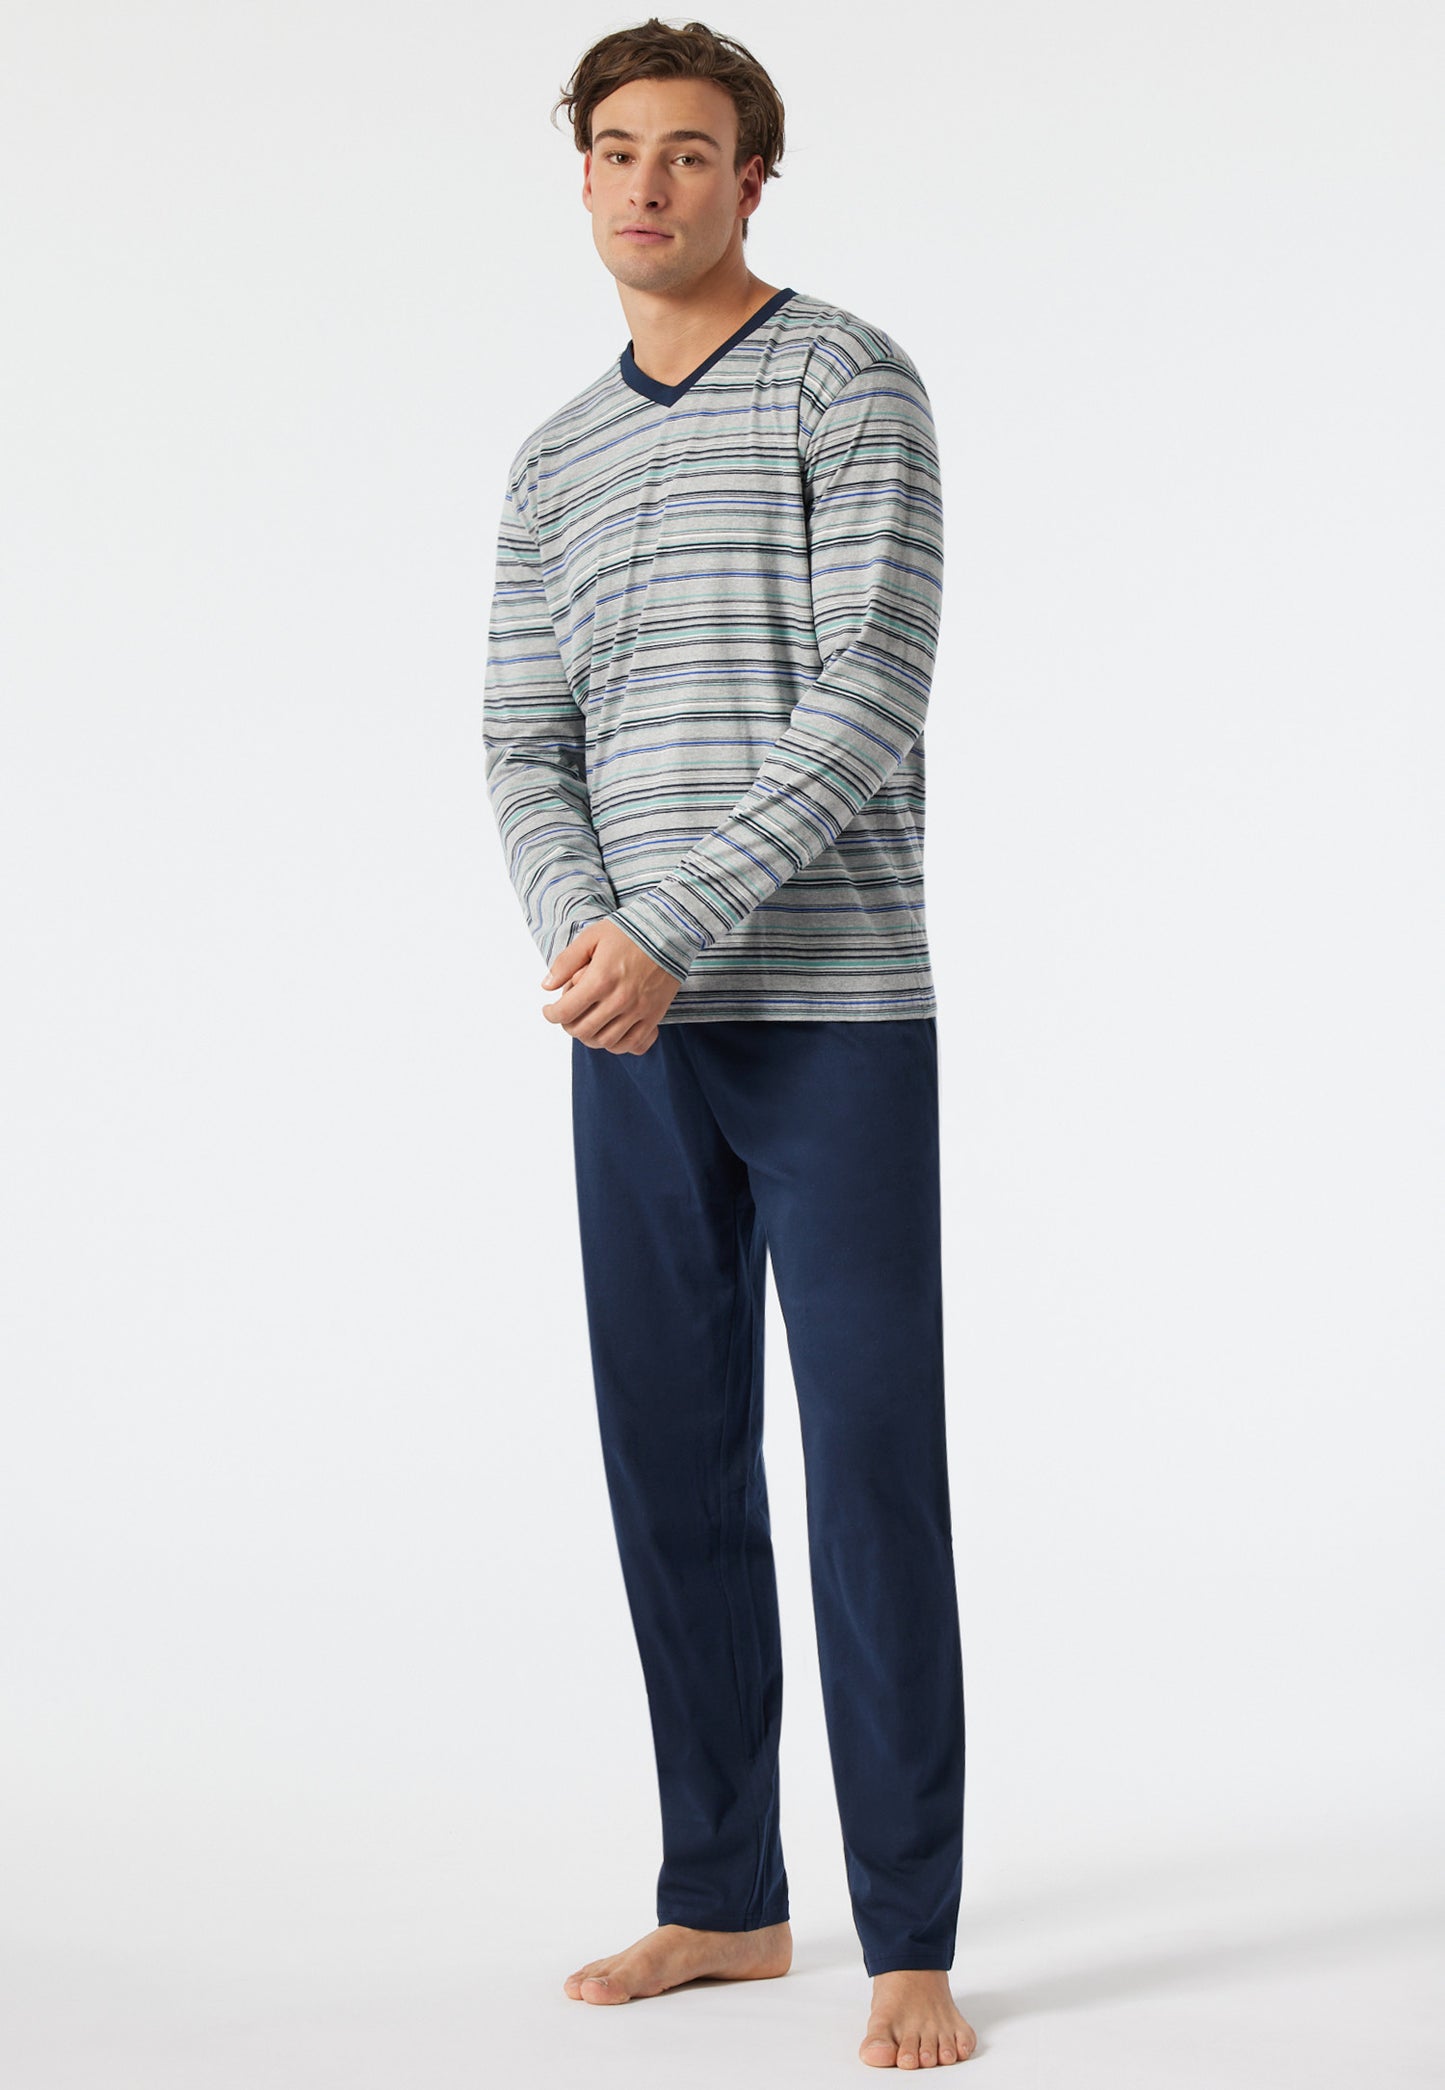 Pajamas long V-neck striped multicolored - Fashion Nightwear